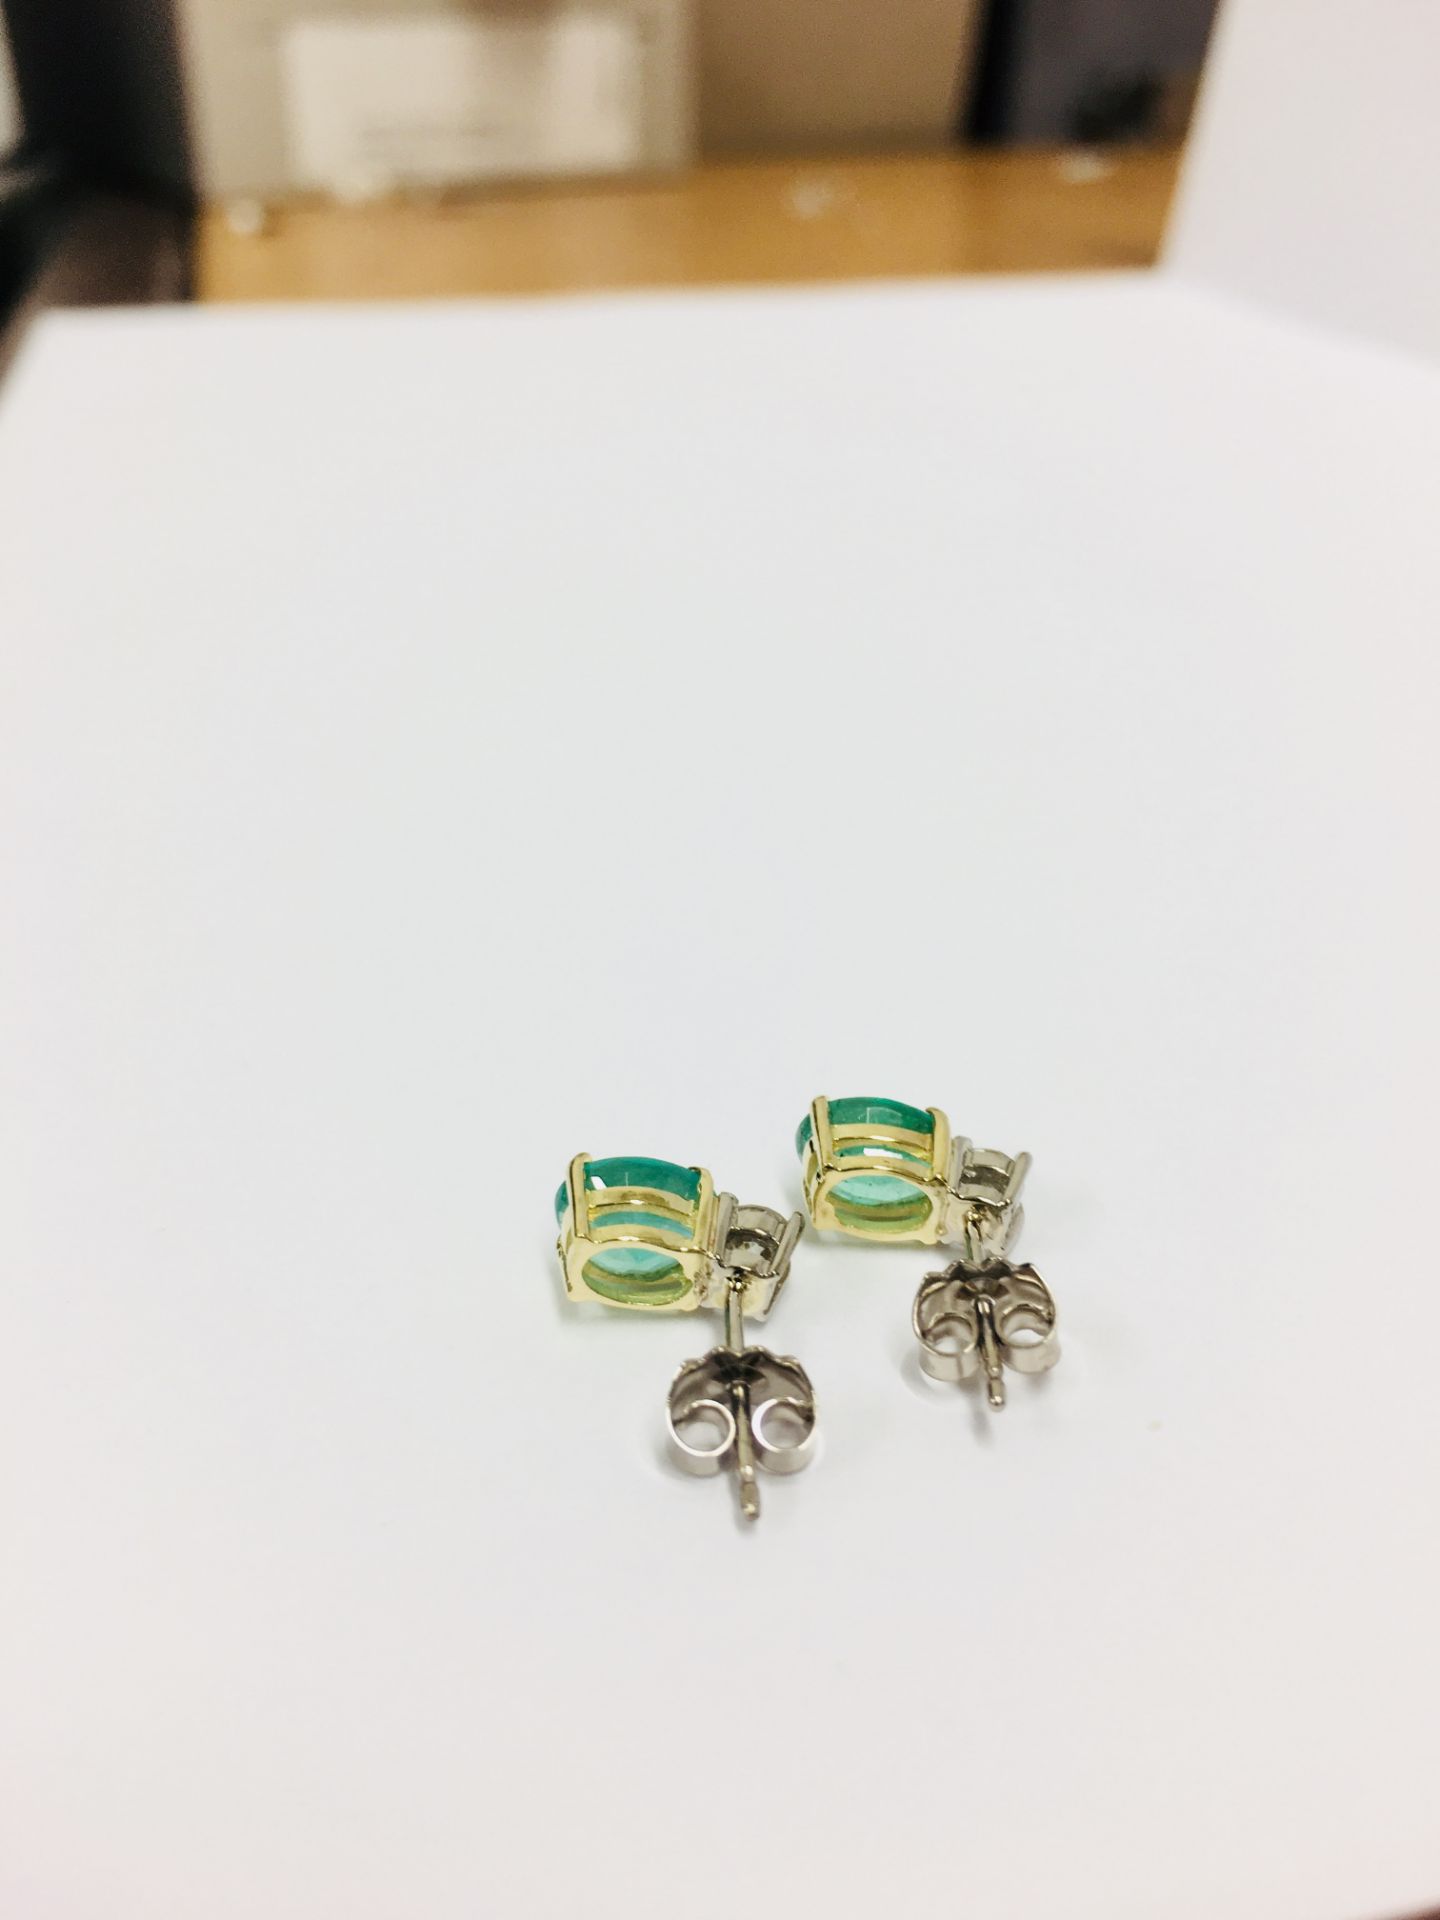 Emerald and diamond earrings 18ct gold,2ct emerald (natural),020ct diamond si2 I colour,3gms 18ct - Bild 4 aus 4